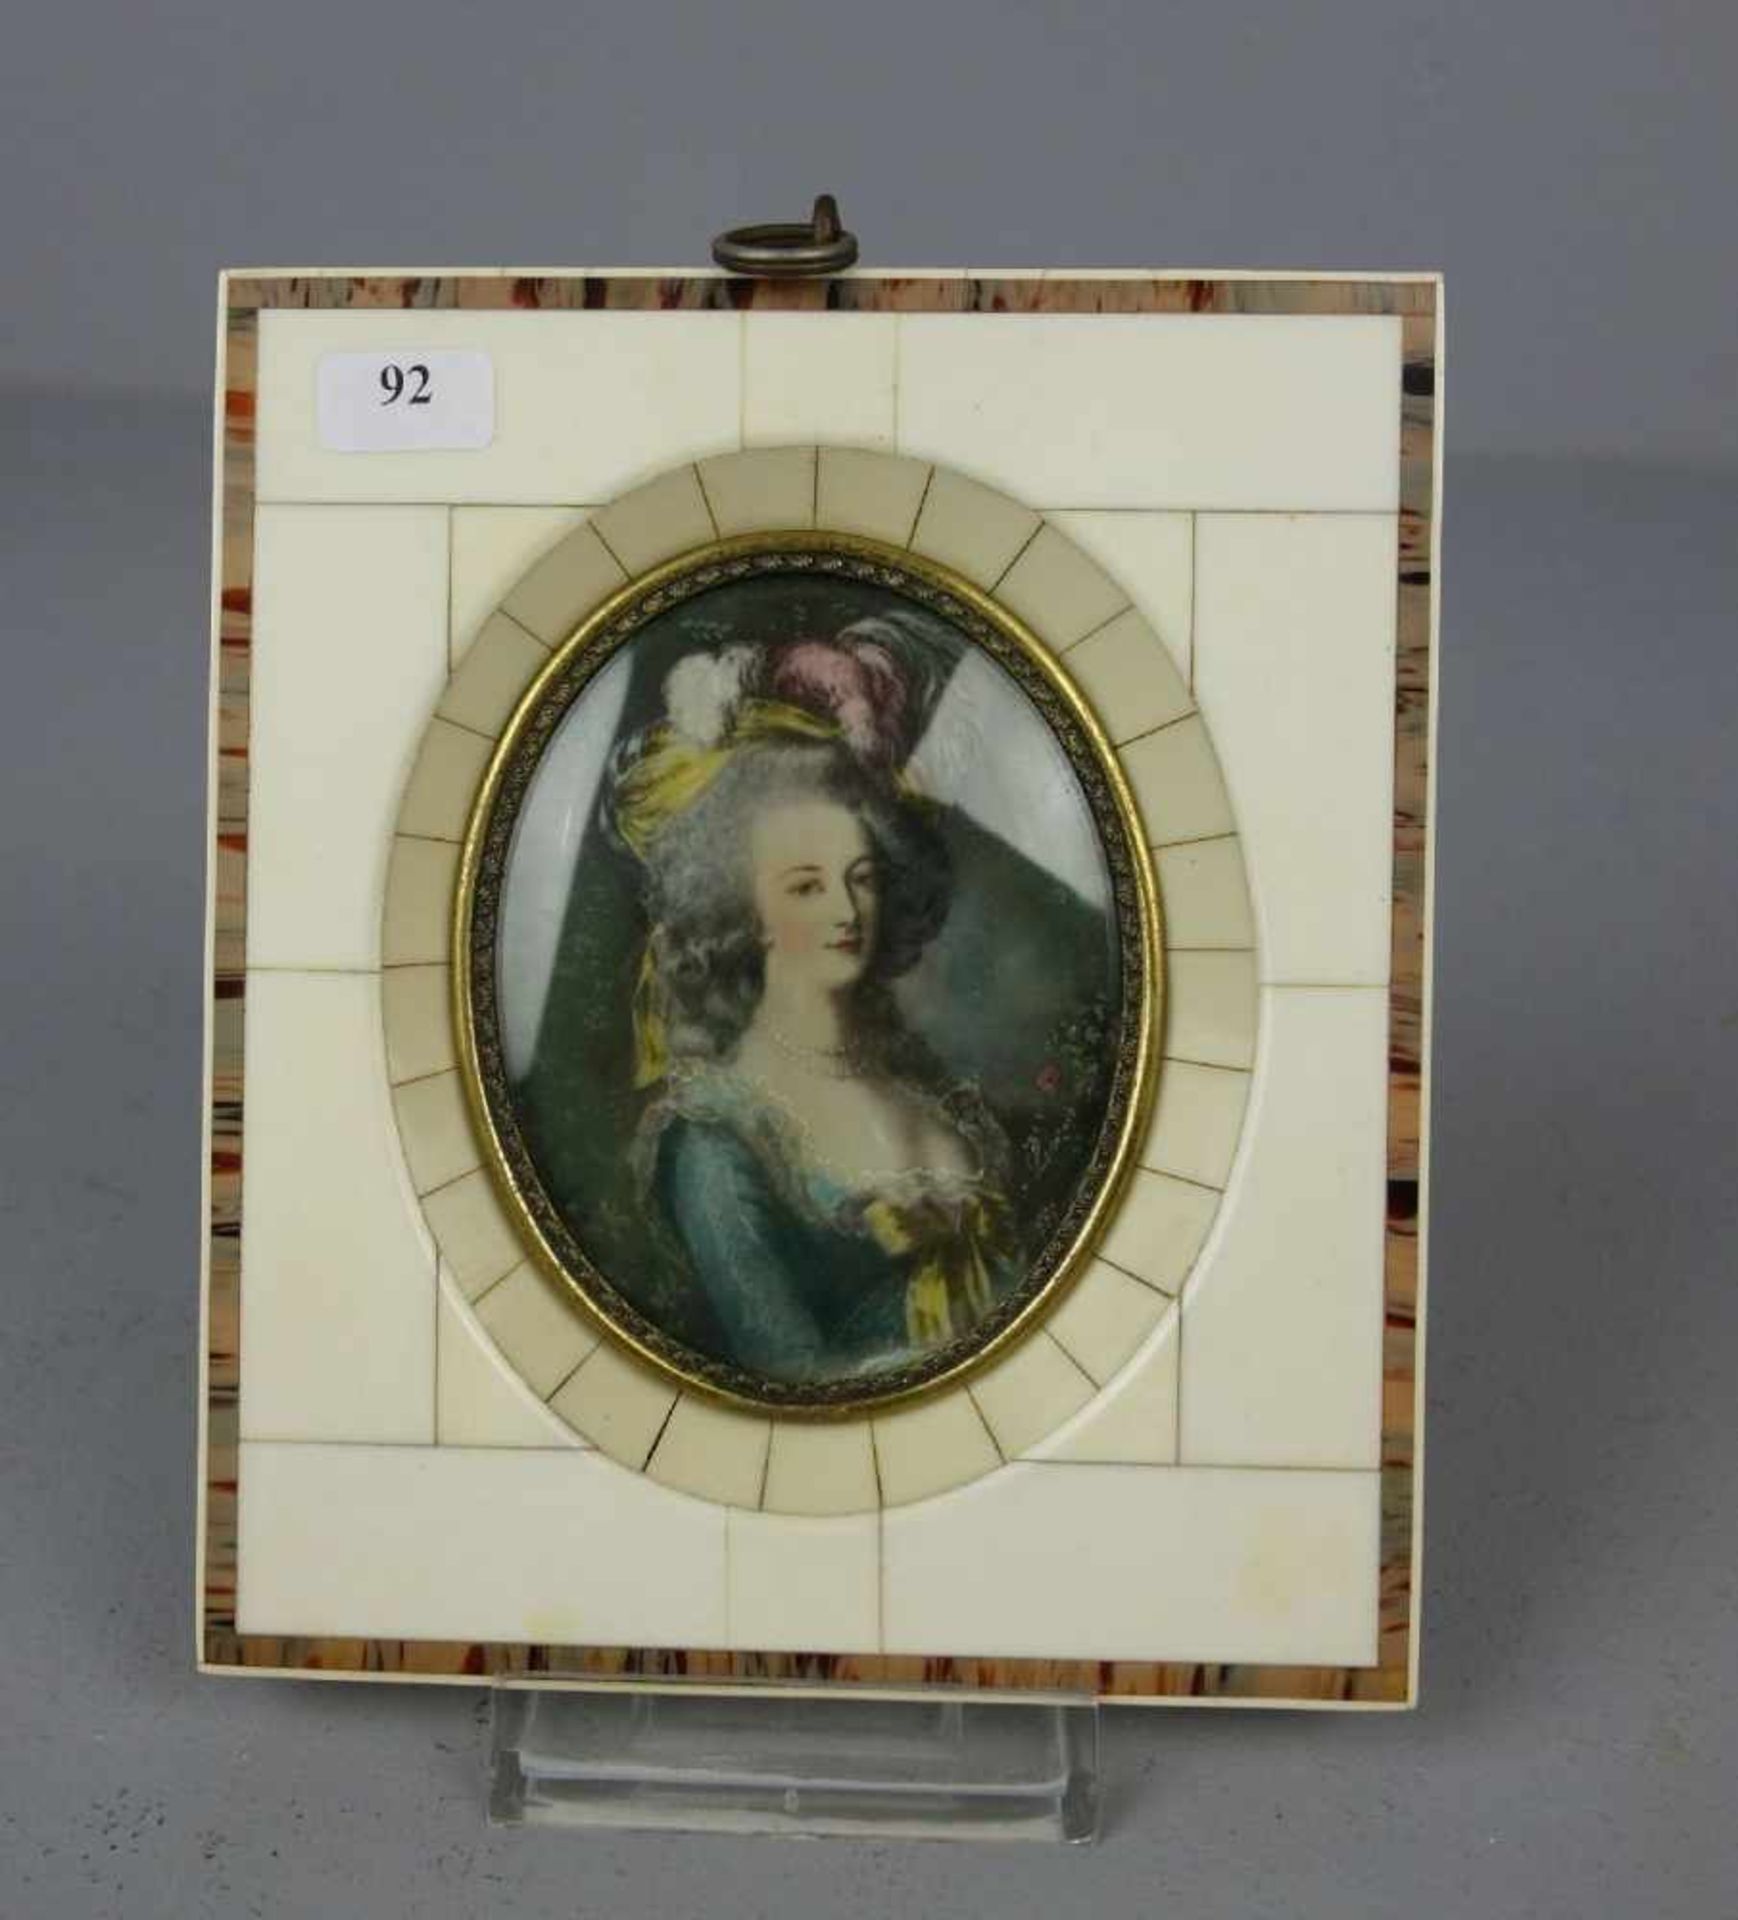 MINIATUR IM BEINRAHMEN, "Marie Antoinette", Temperamalerei. Ovaler Bildausschnitt hinter